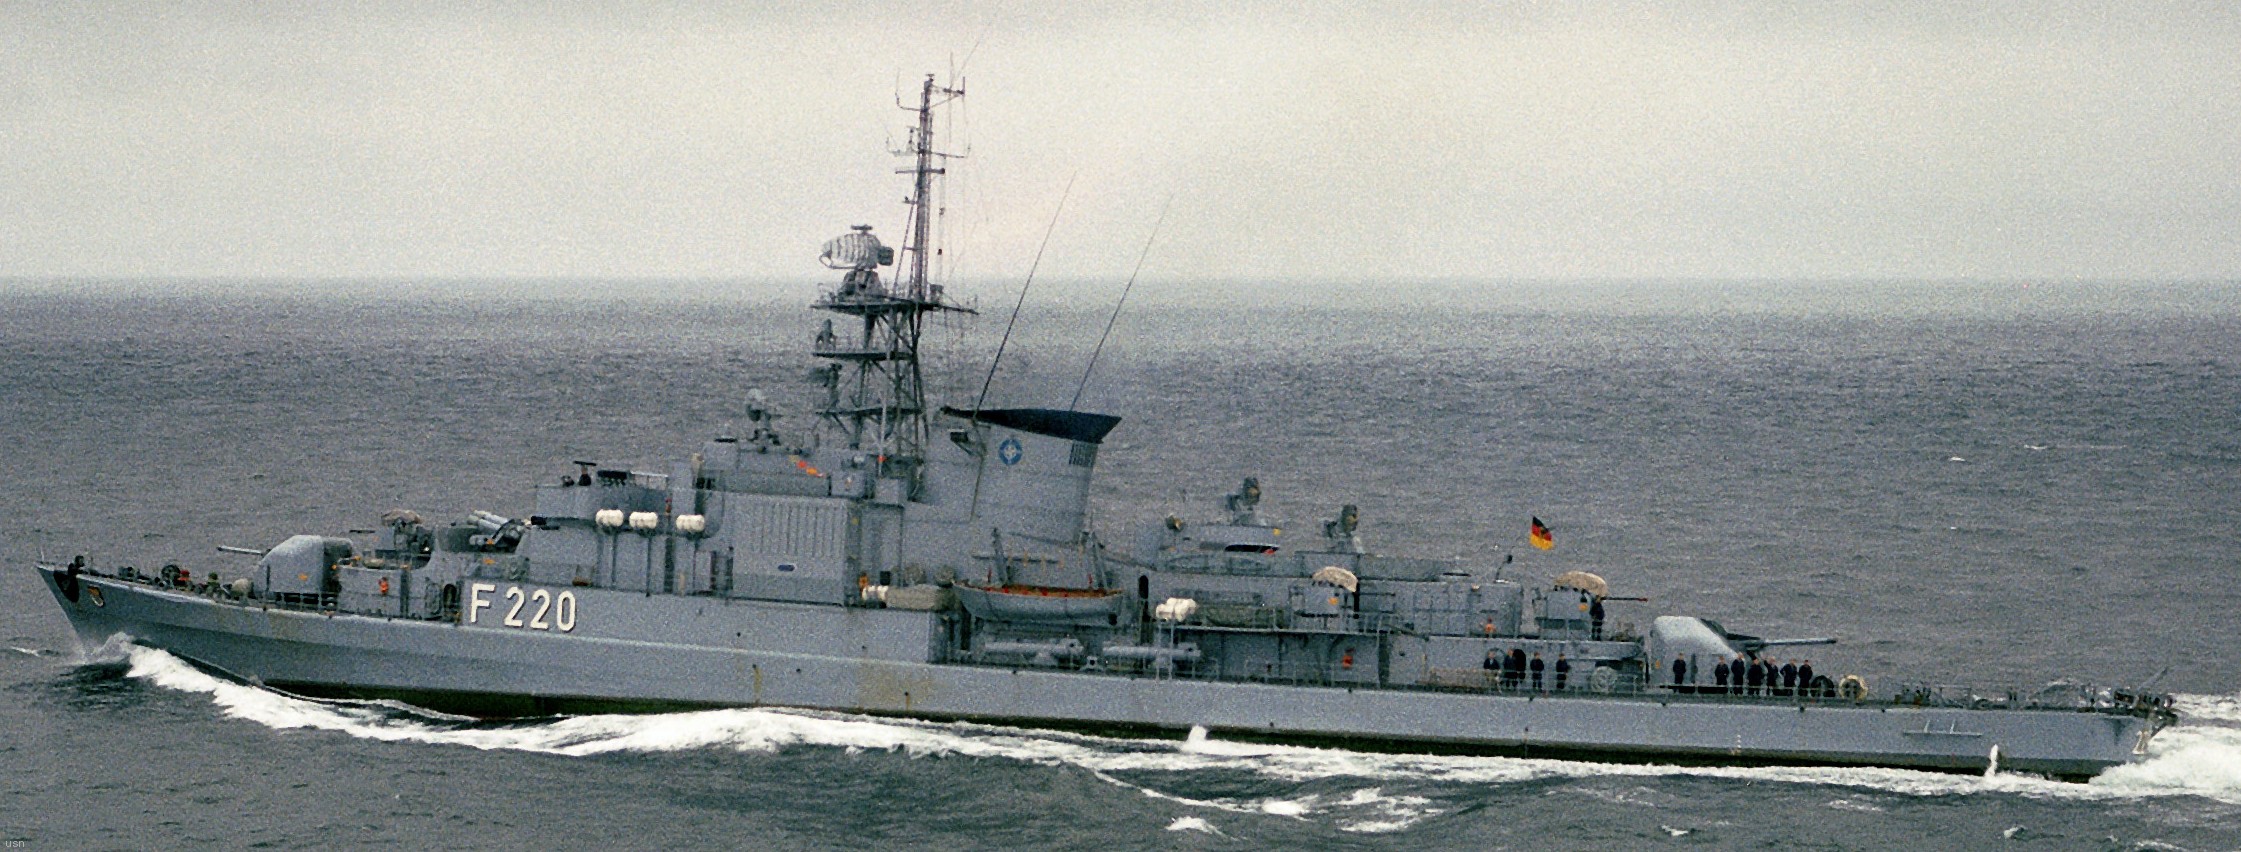 f-220 fgs köln koln type 122 class frigate german navy 03